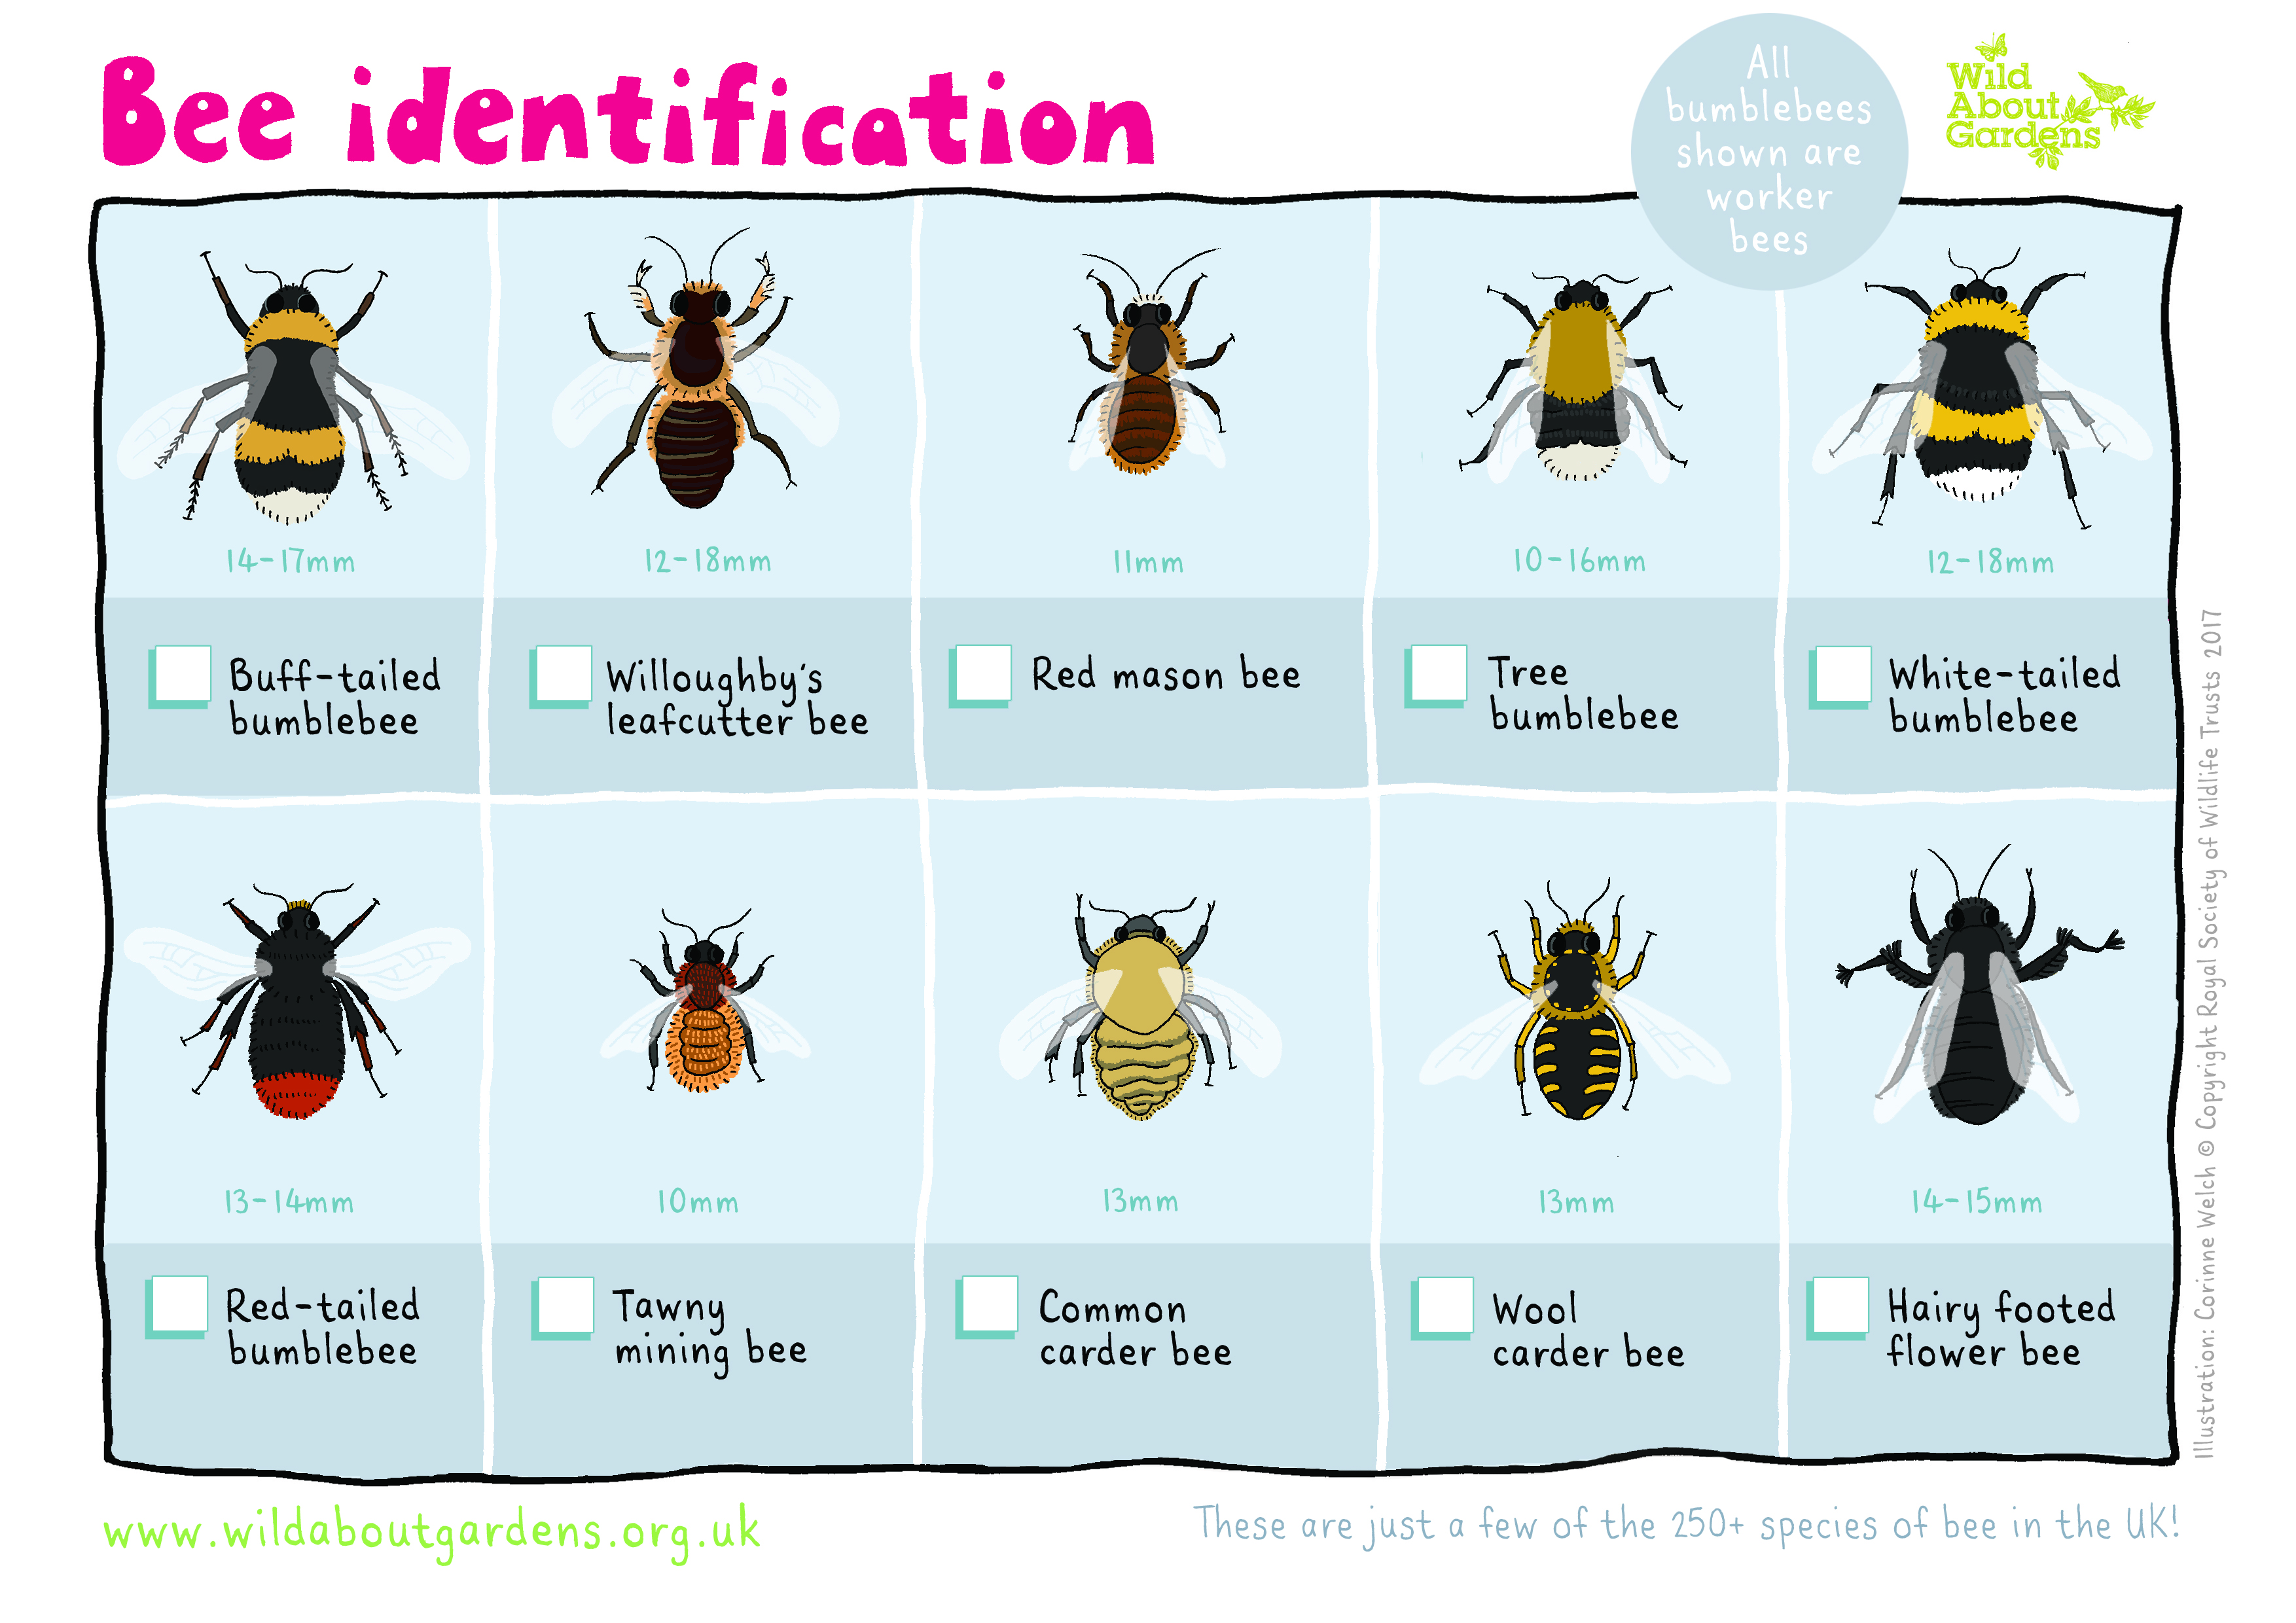 Wildlife Trusts bee identification sheet